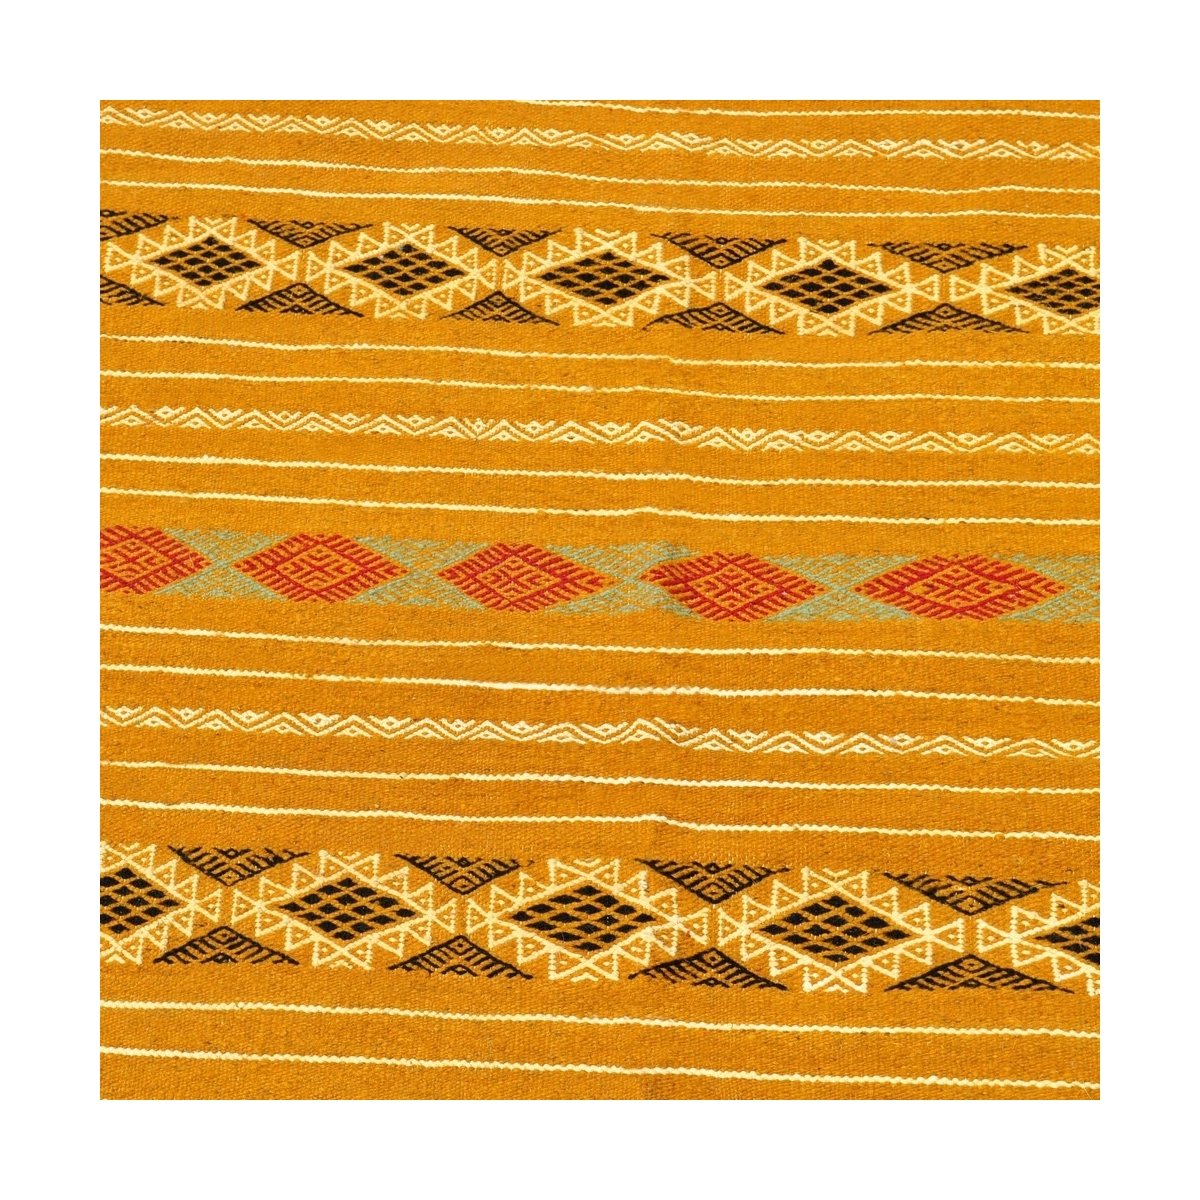 Tapete berbere Tapete Kilim Fahs 100x150 Branco/Amarelado (Tecidos à mão, Lã) Tapete tunisiano kilim, estilo marroquino. Tapete 